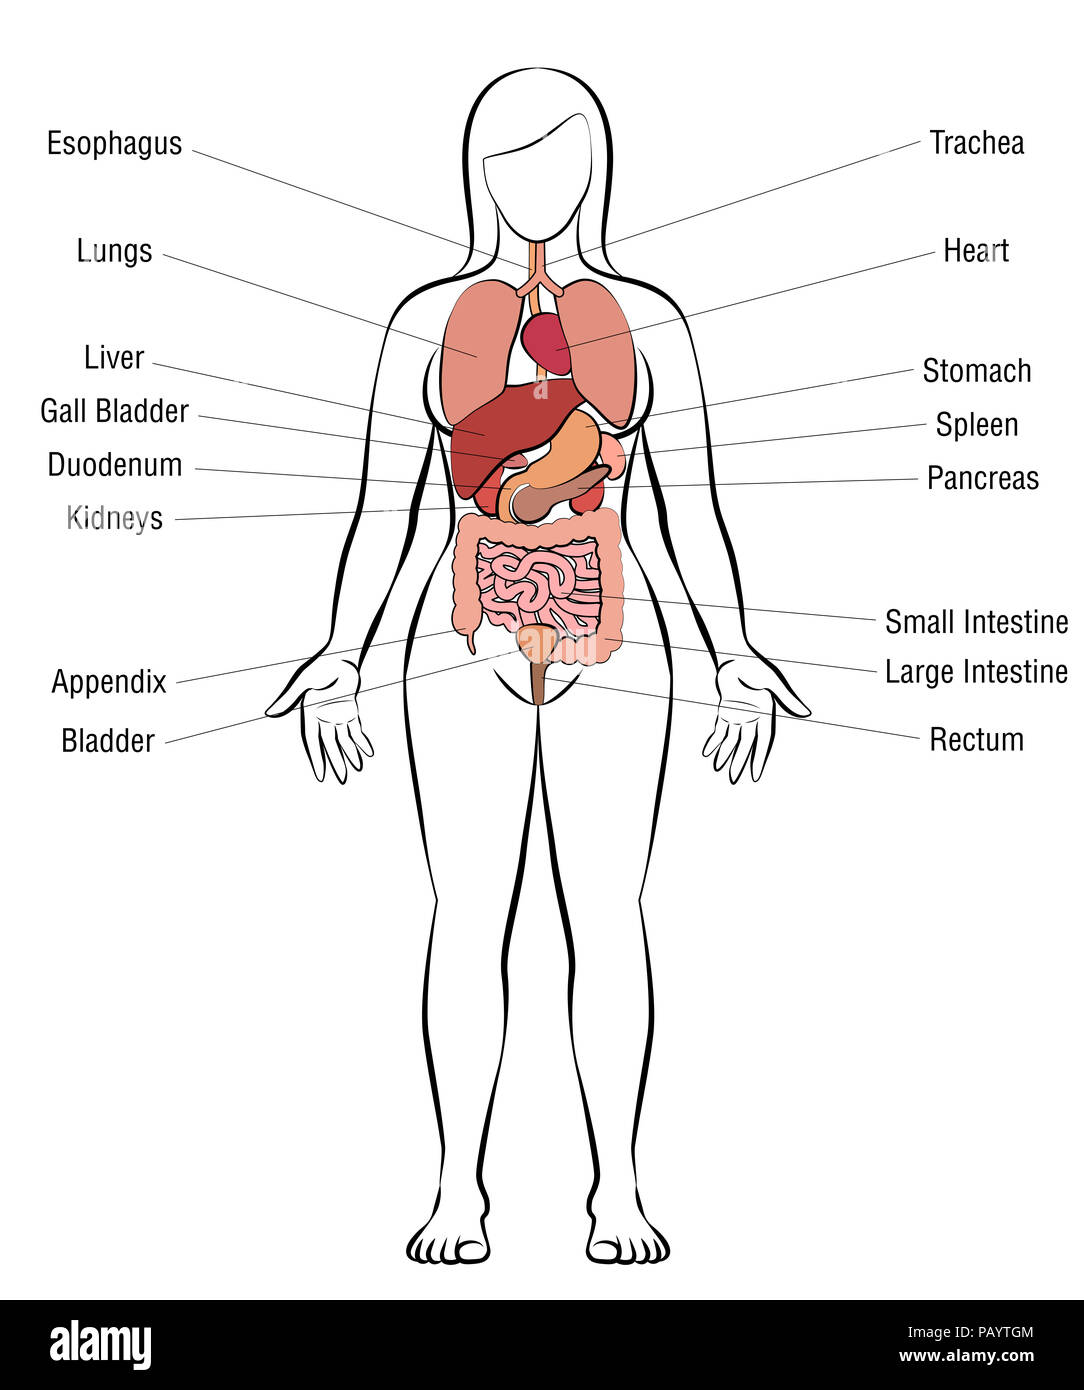 Human Body Female Organs Stock Photos & Human Body Female Organs Stock Images - Alamy